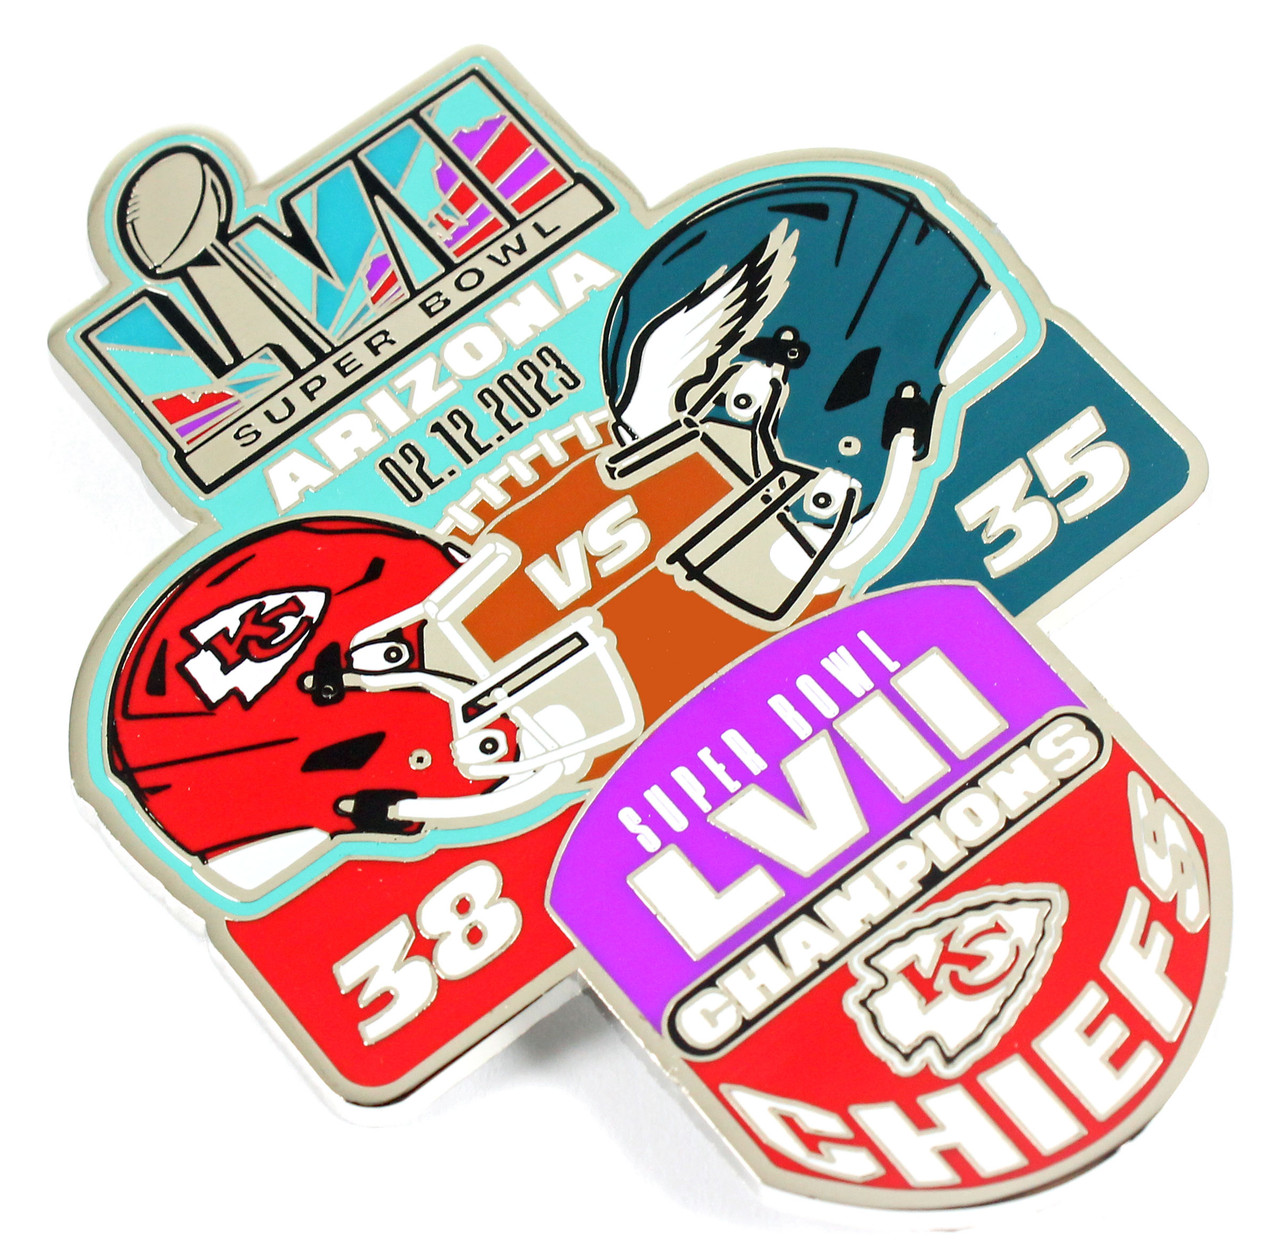 Super Bowl LVII (57) Oversized Commemorative Pin - Dangler Style